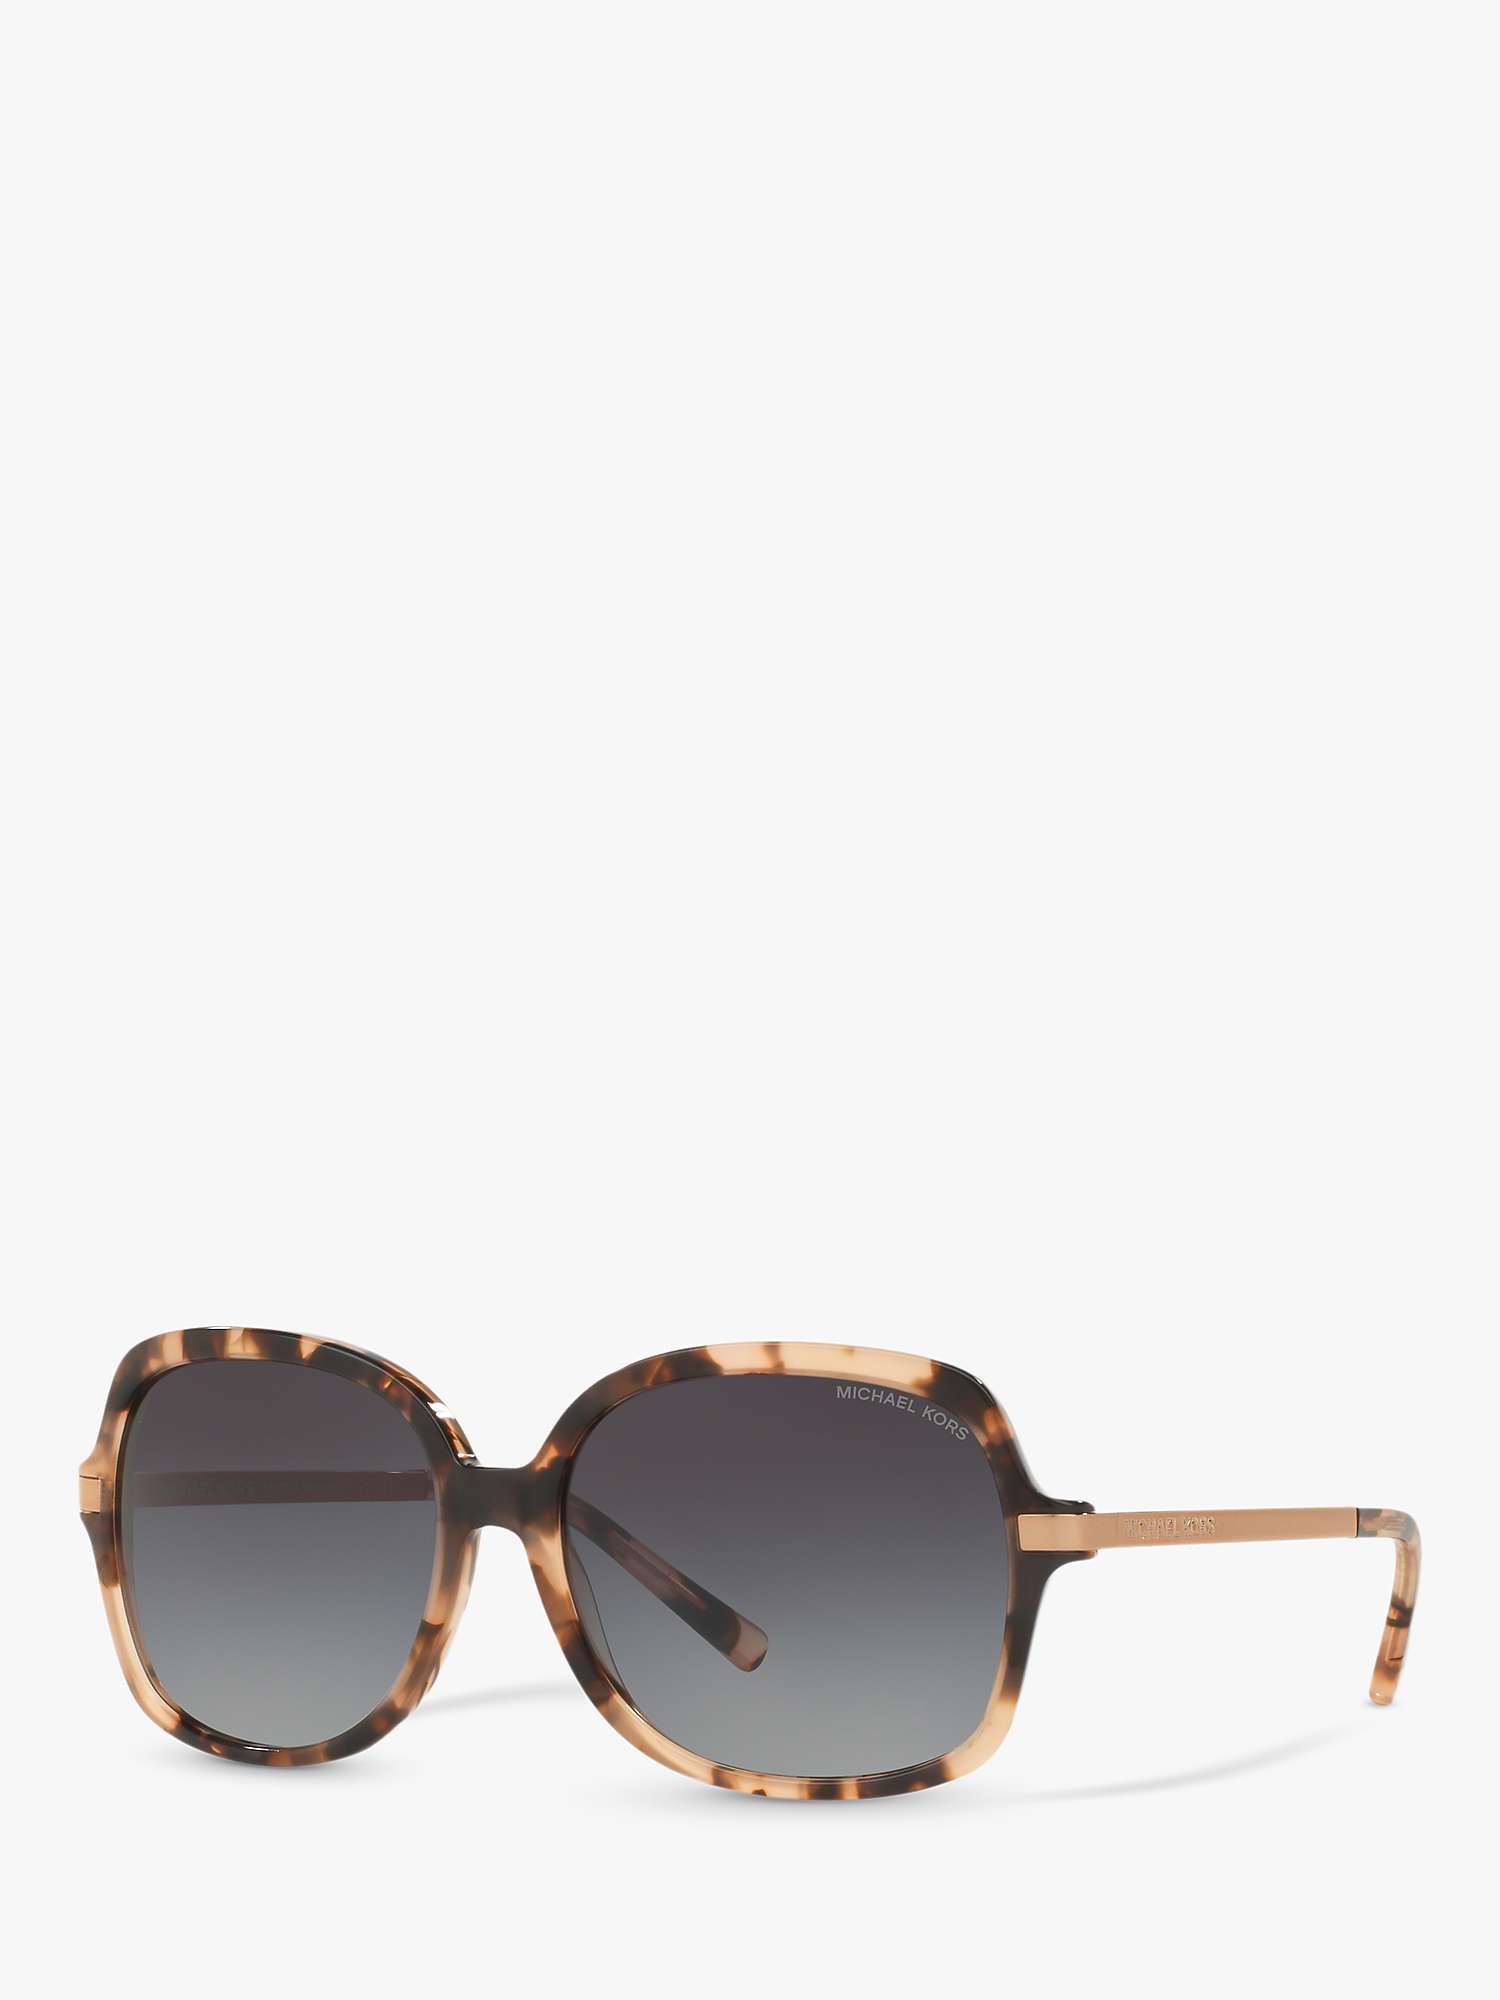 Buy Michael Kors MK2024 Women's Adrianna II Square Sunglasses Online at johnlewis.com